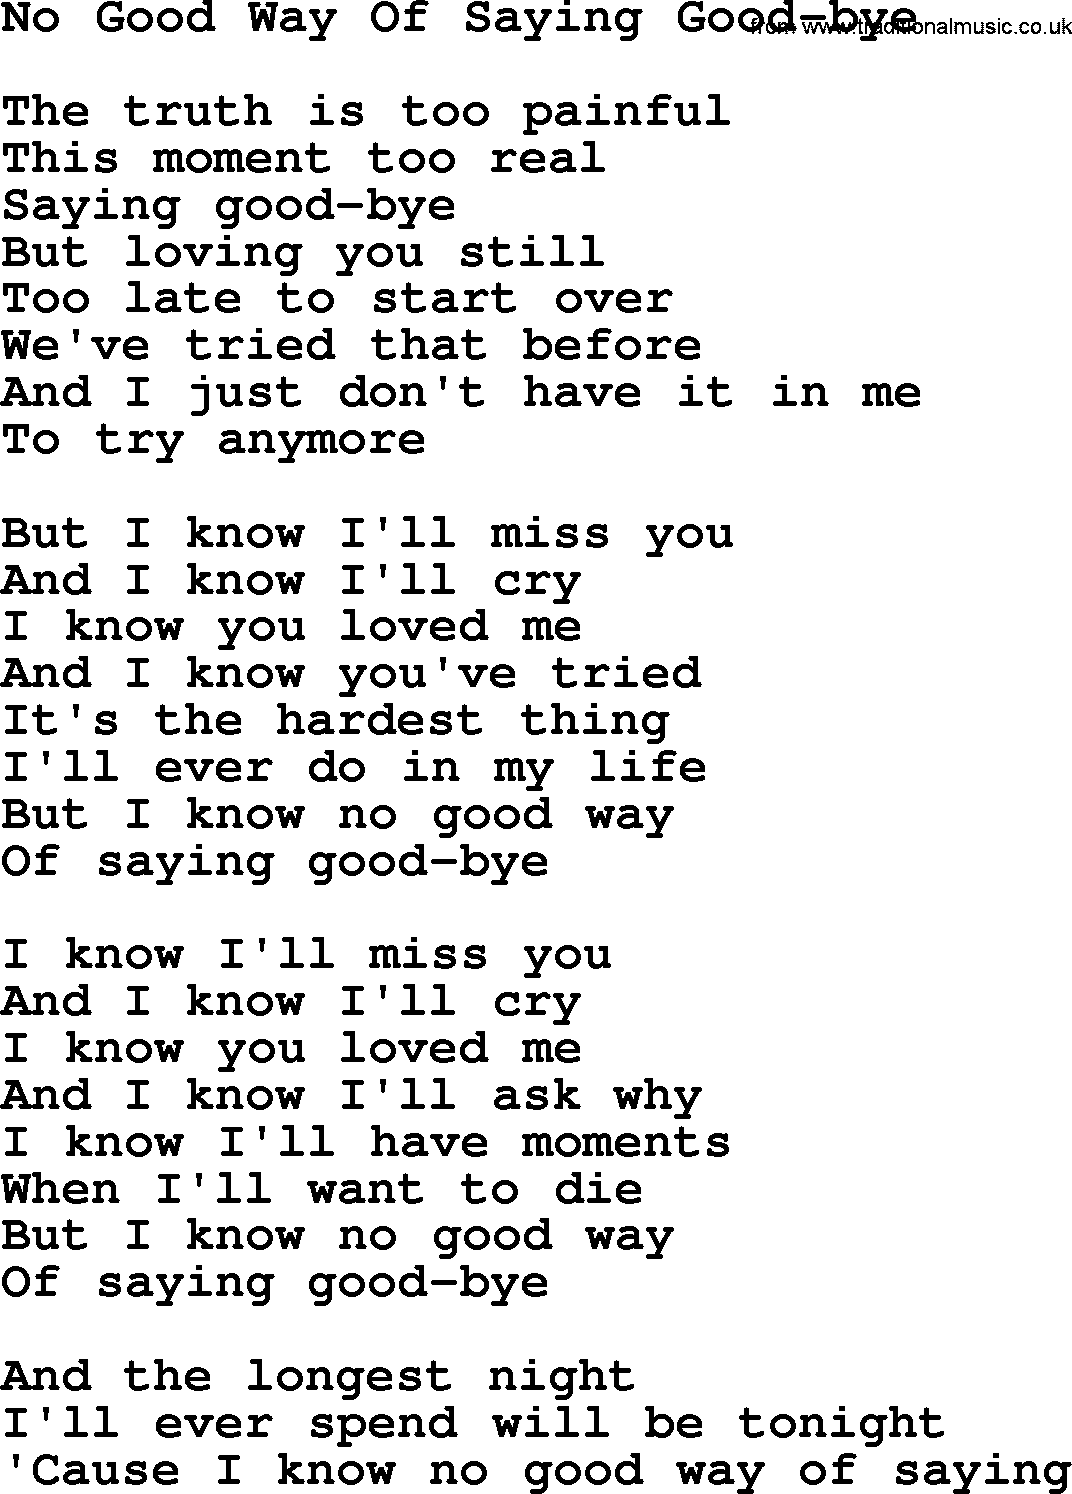 Dolly Parton song No Good Way Of Saying Good-bye.txt lyrics